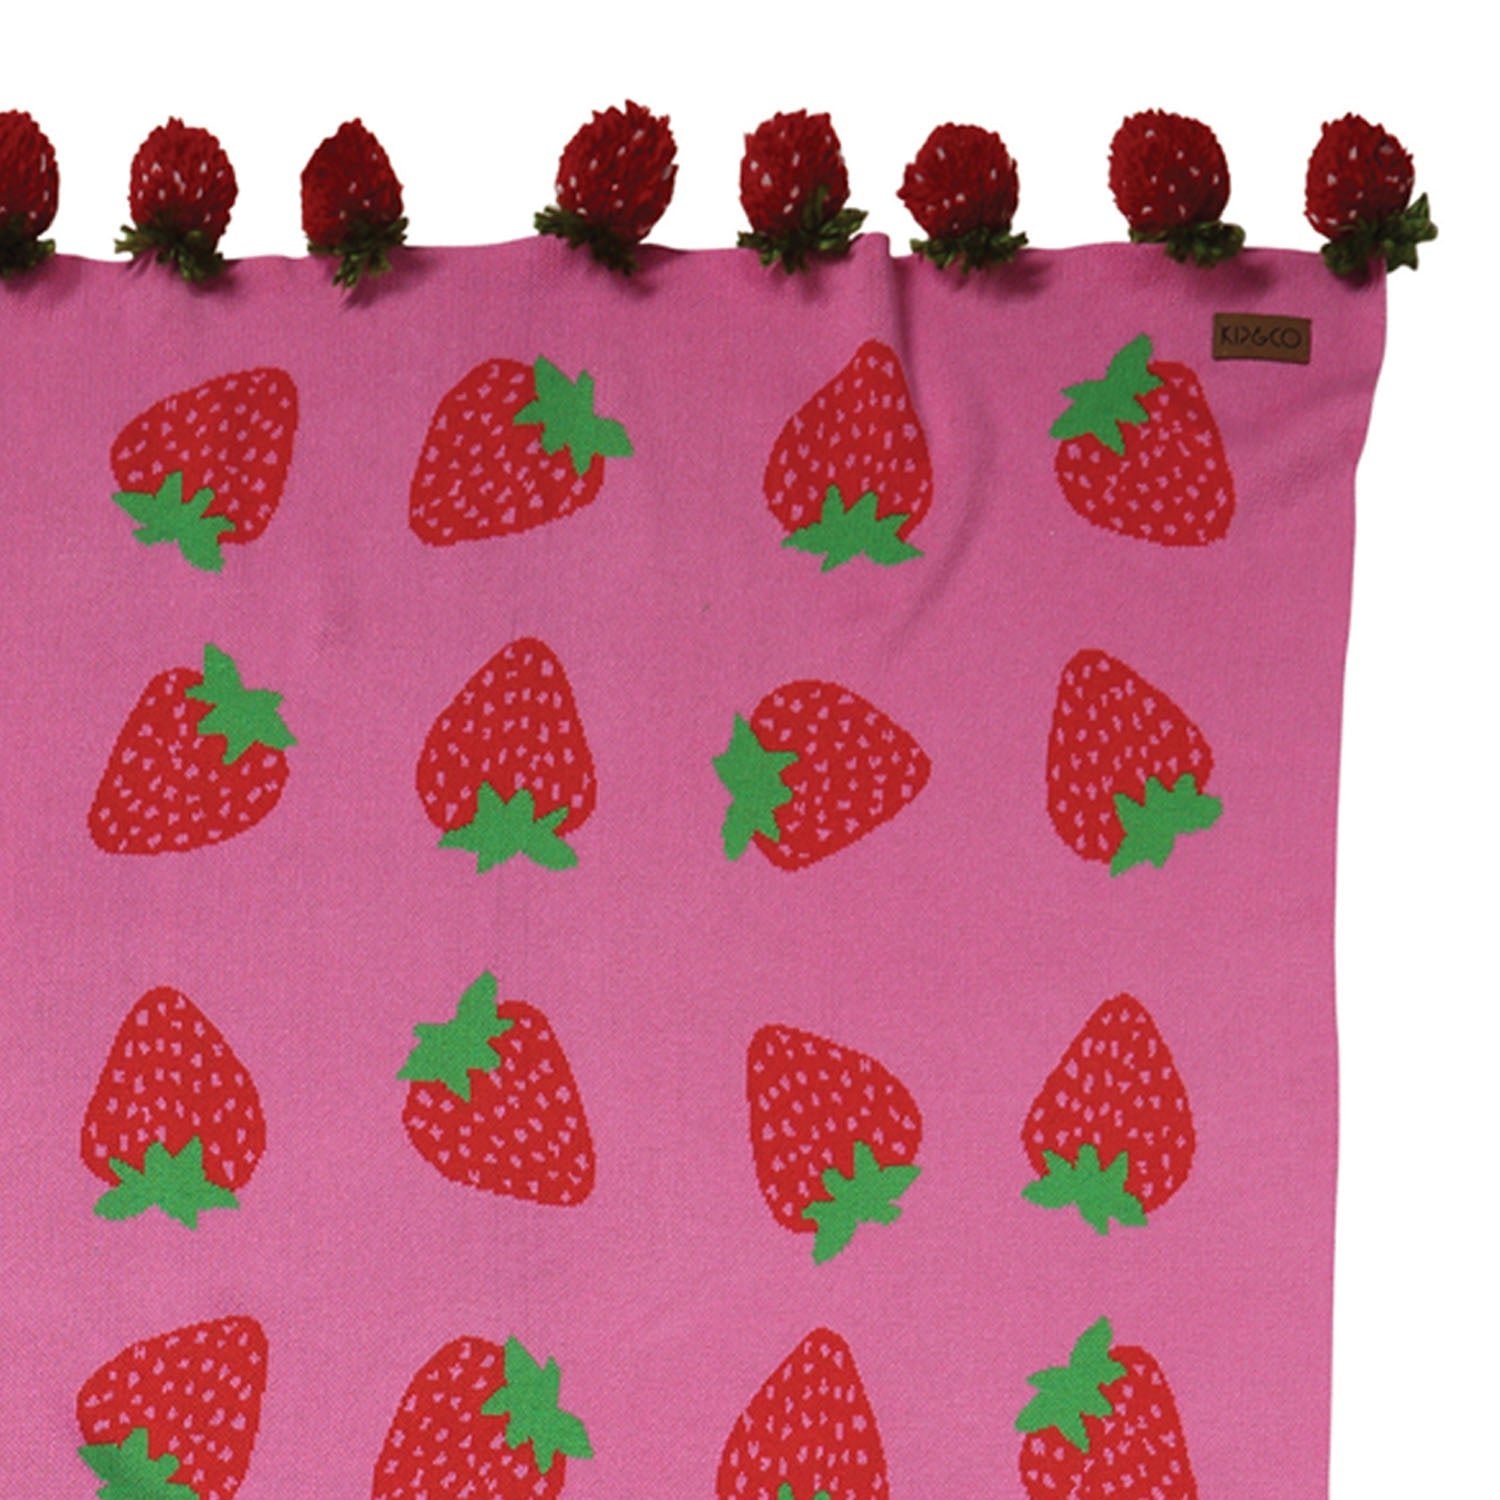 Knitted Blanket - Strawberry Delight